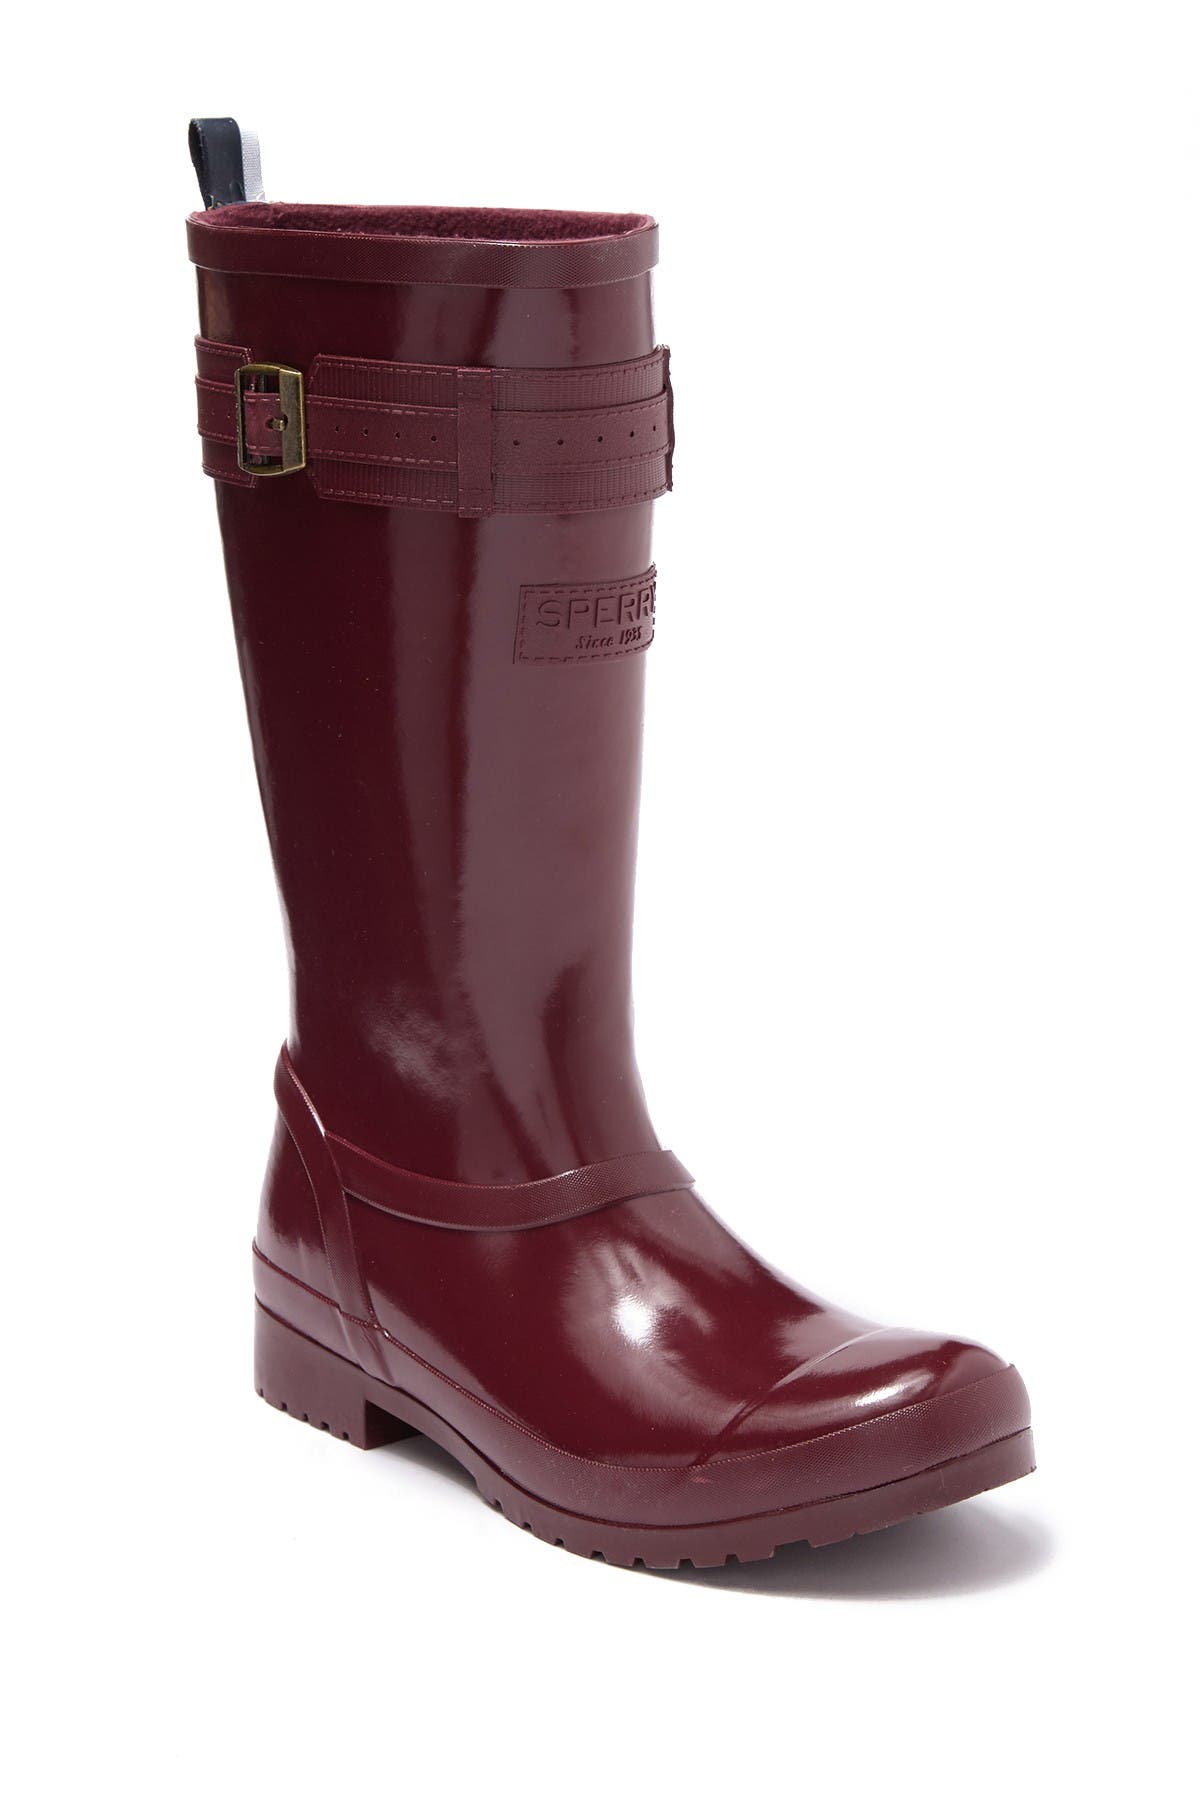 sperry rain boots canada